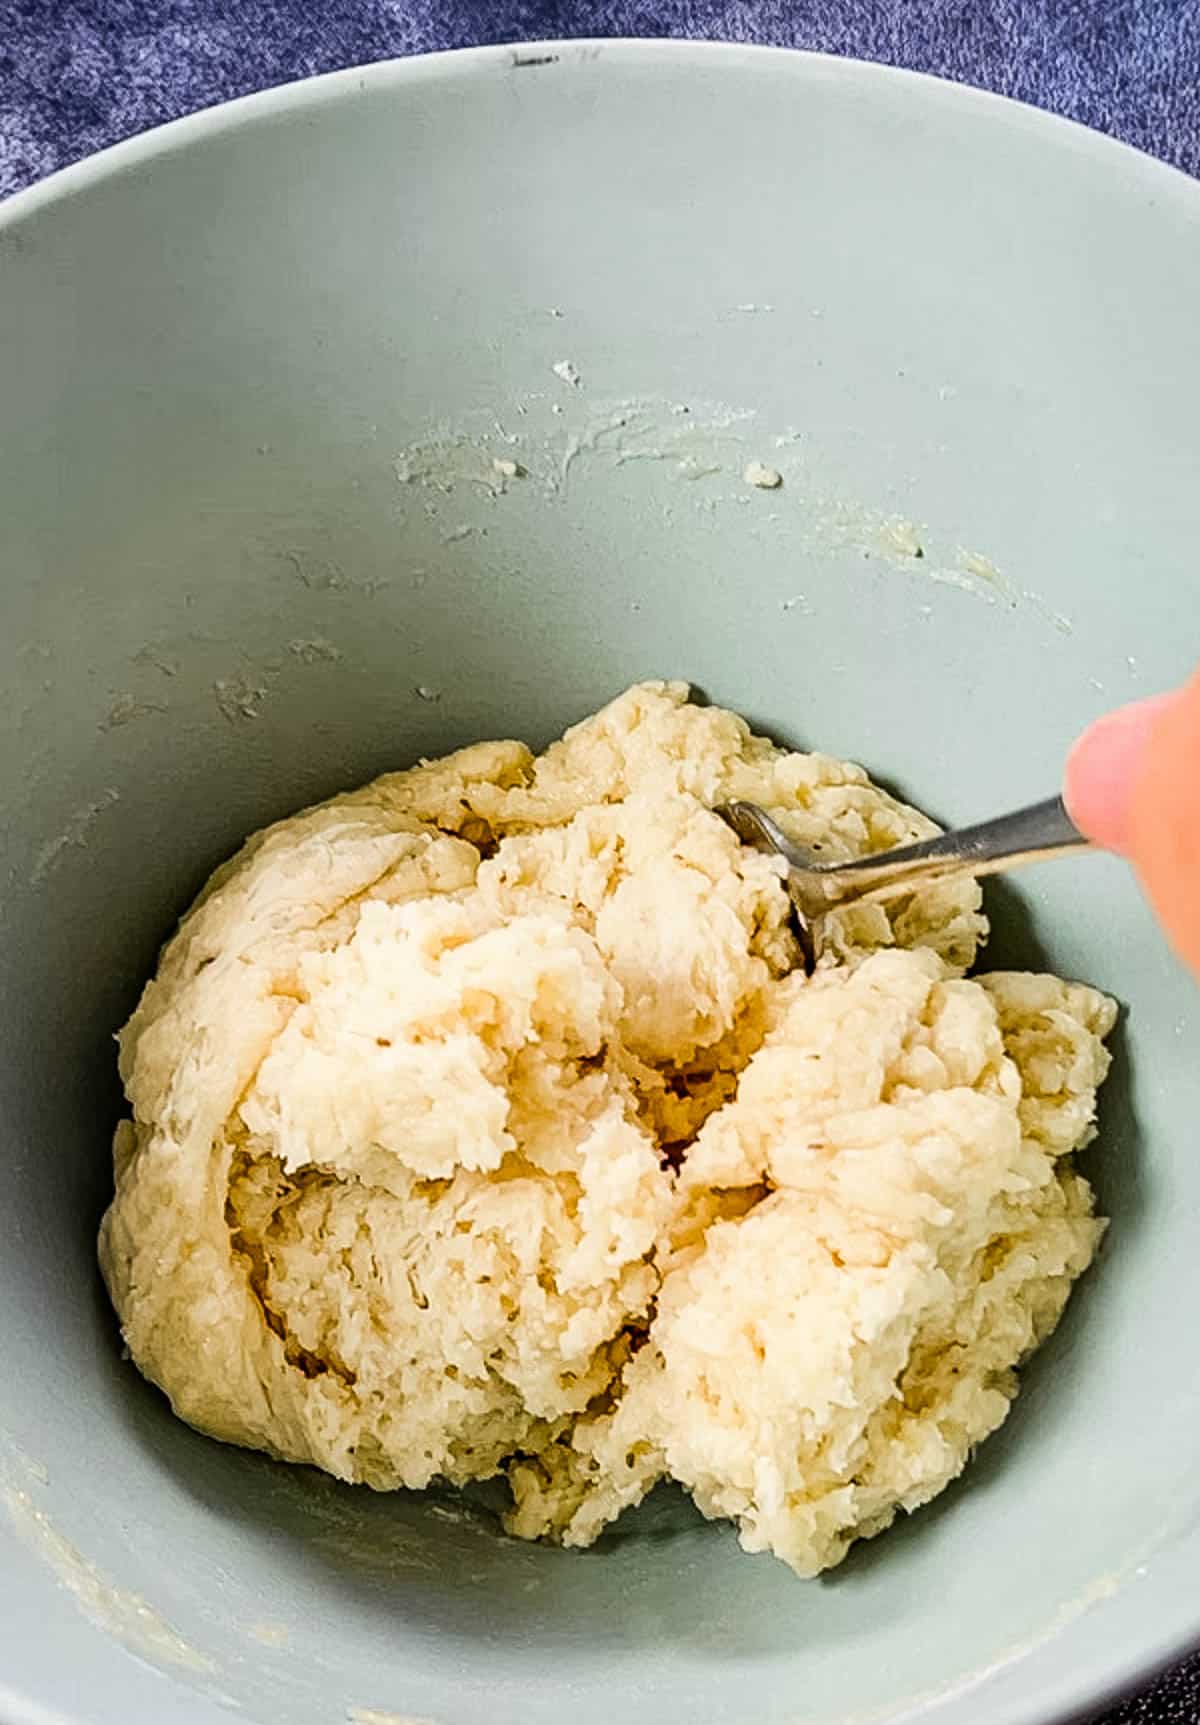 A person preparing samosa dough in a bowl.